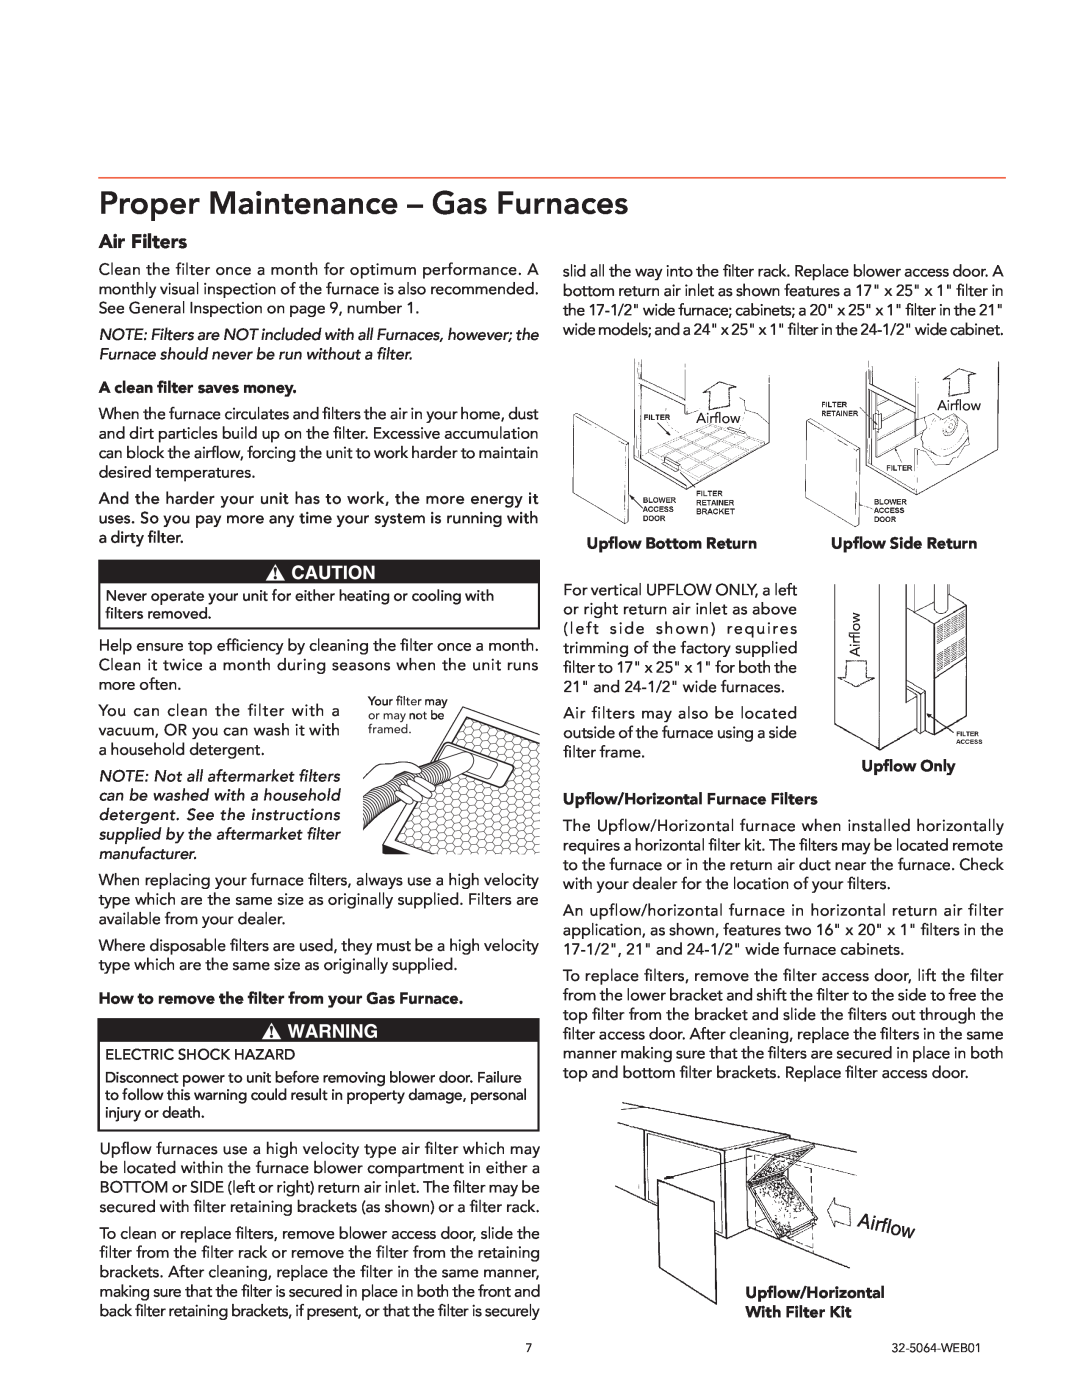 Trane Air Handlers Gas Furnaces Proper Maintenance - Gas Furnaces, Air Filters, Upflow Bottom Return, Upflow Side Return 